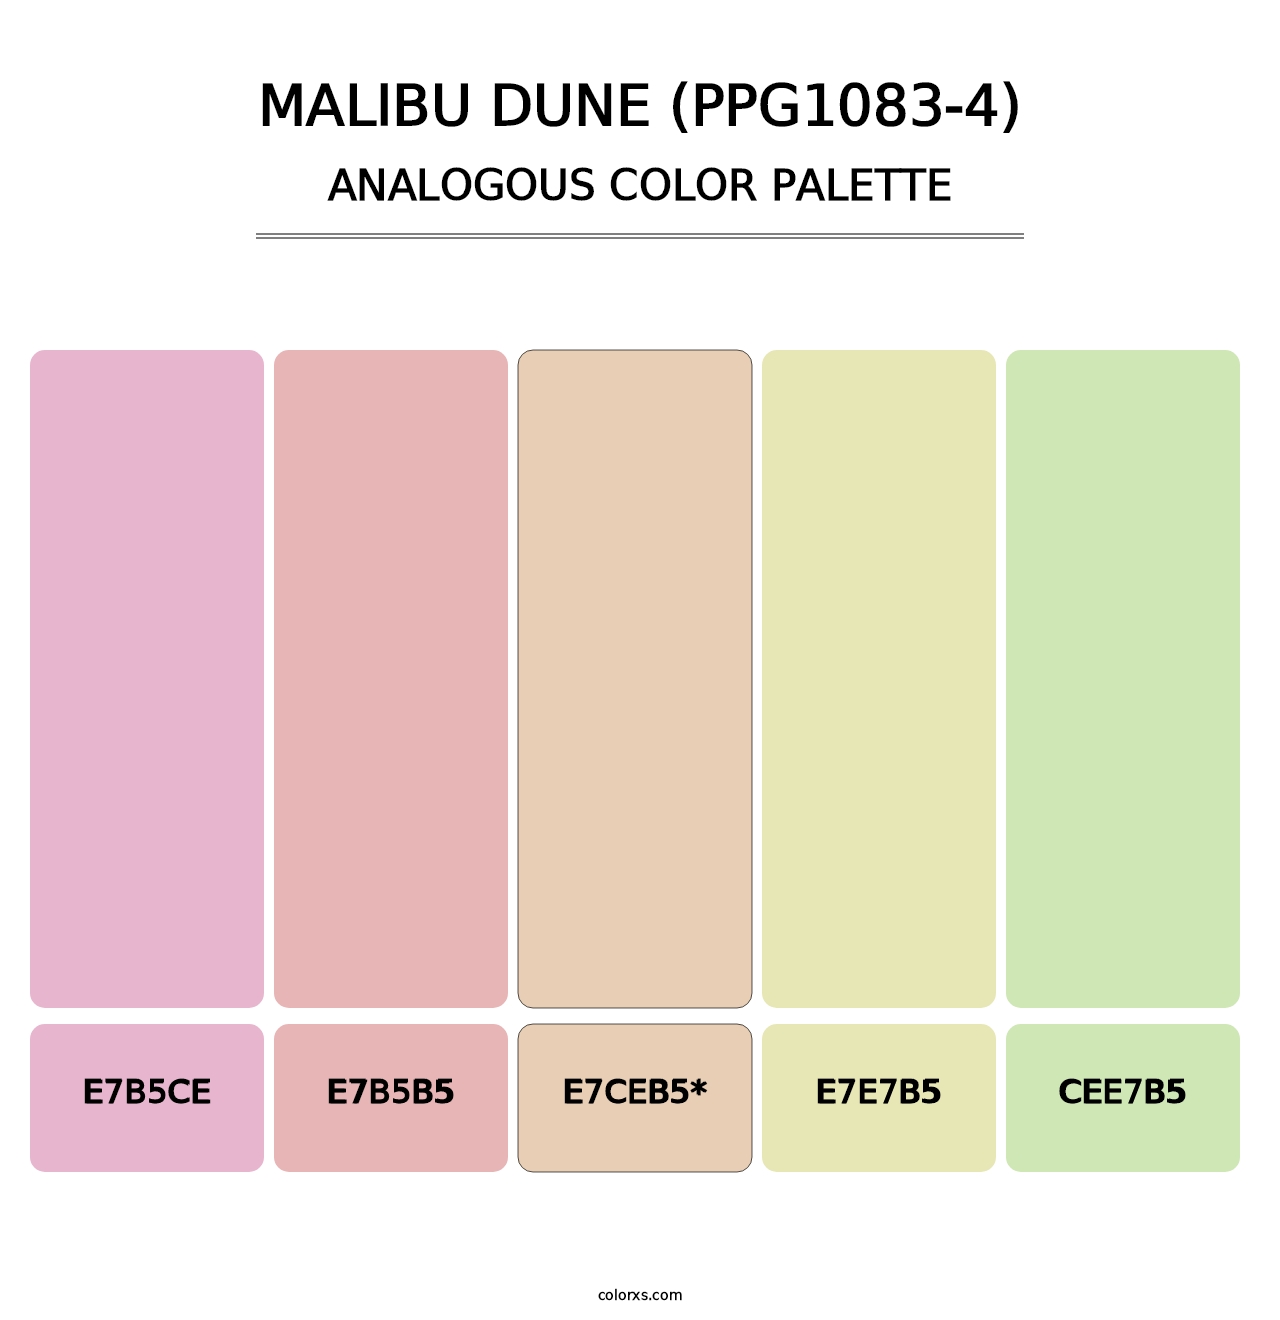 Malibu Dune (PPG1083-4) - Analogous Color Palette